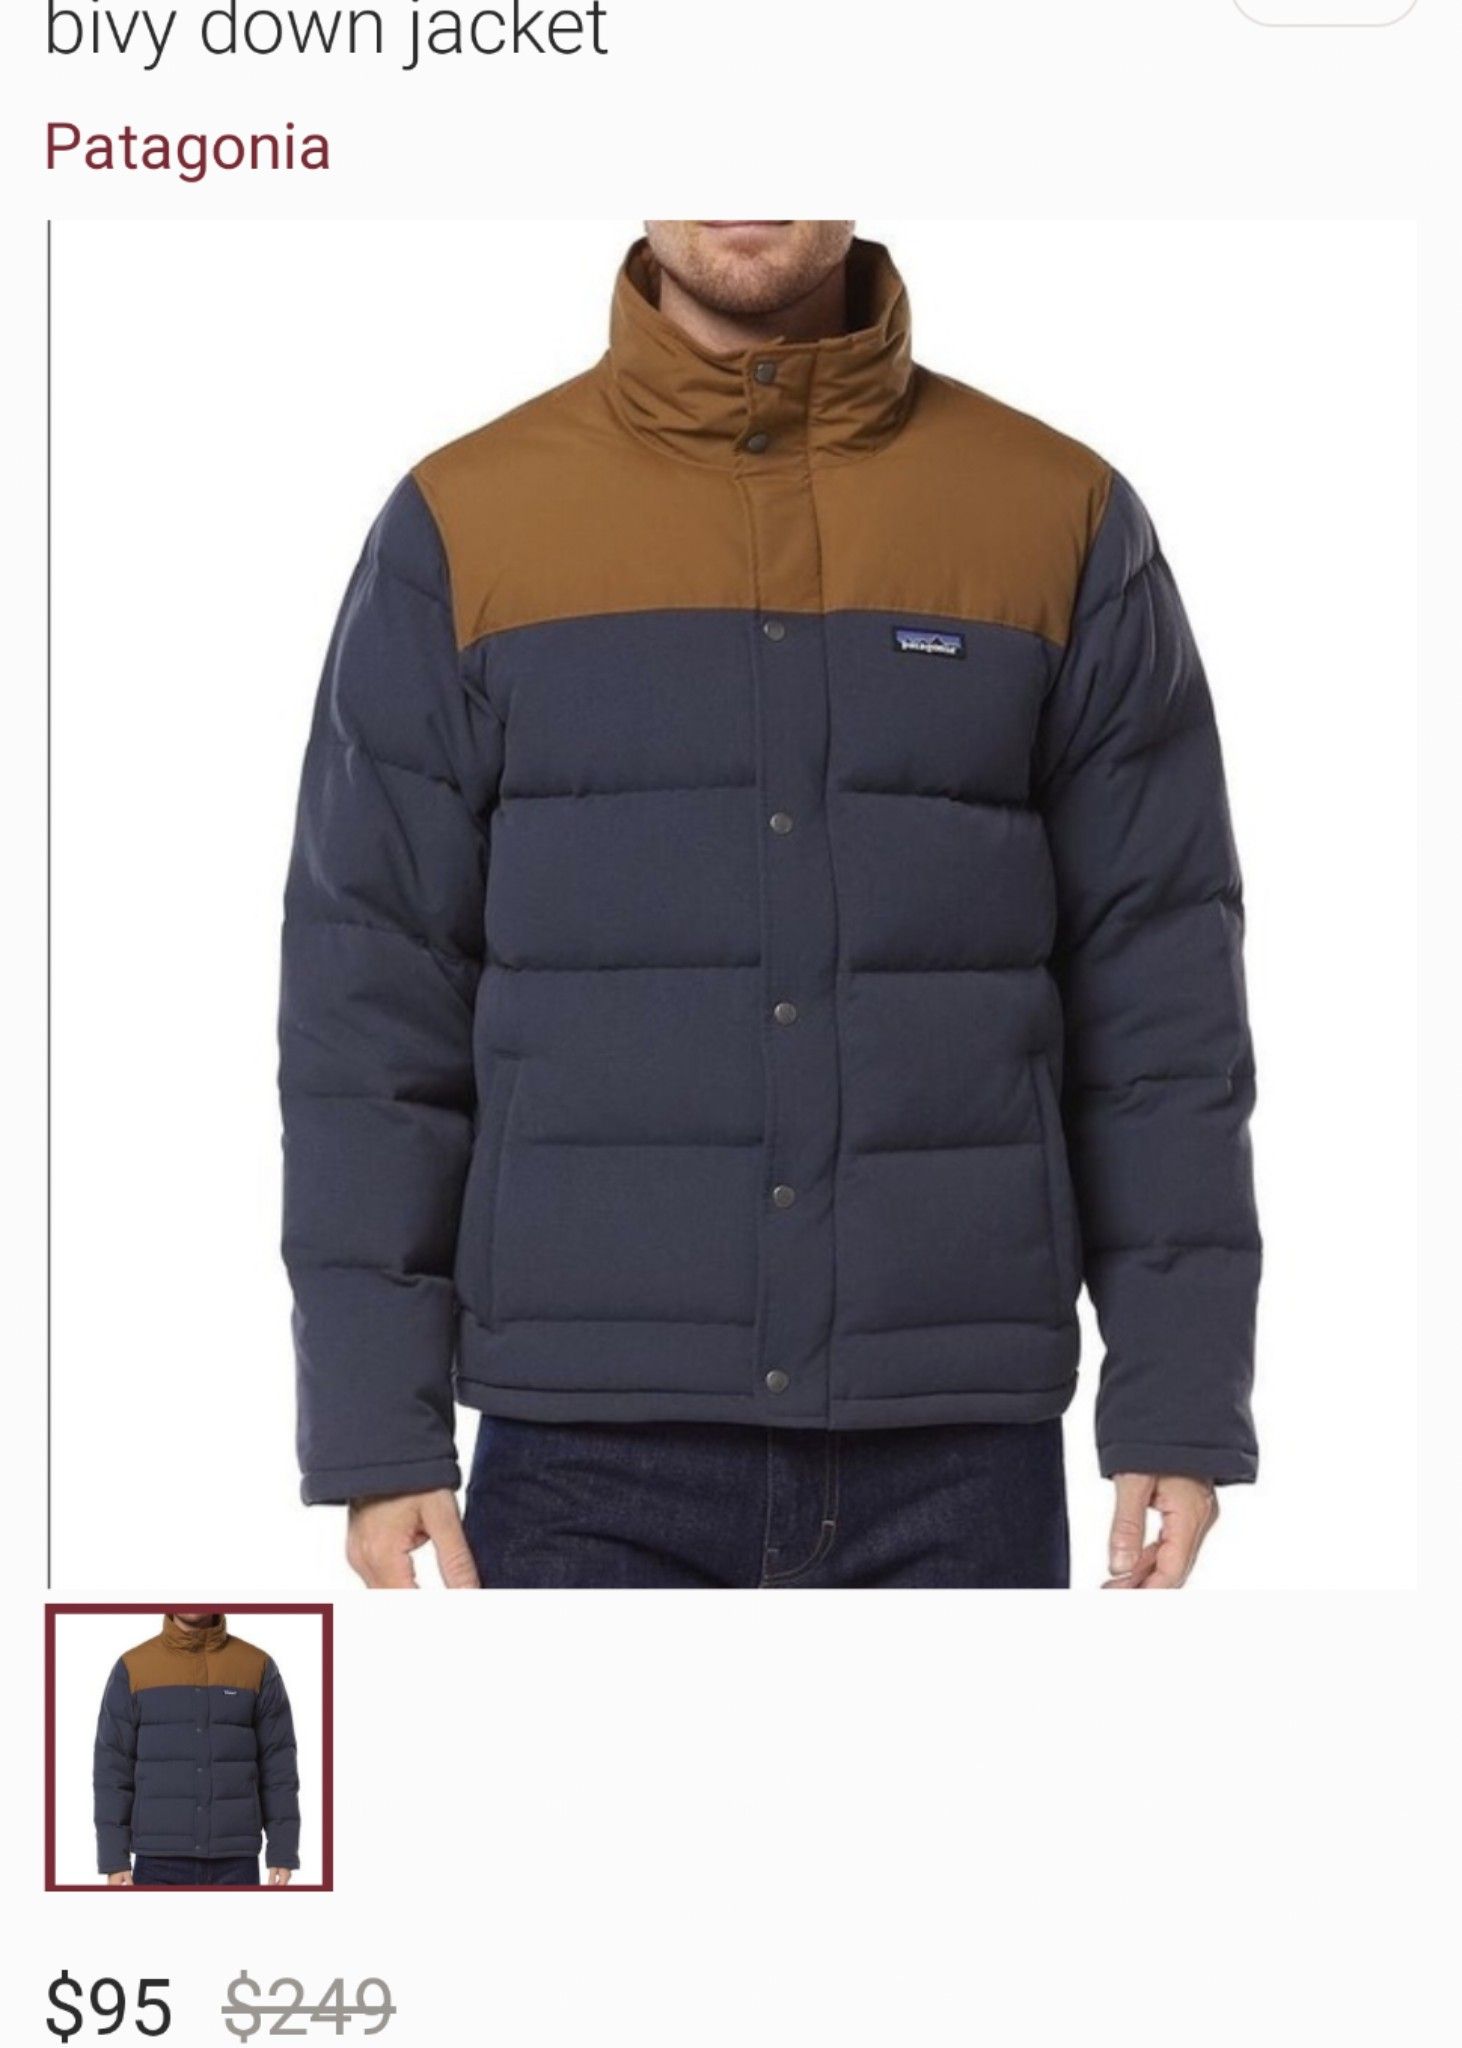 Patagonia Bivy Down jacket